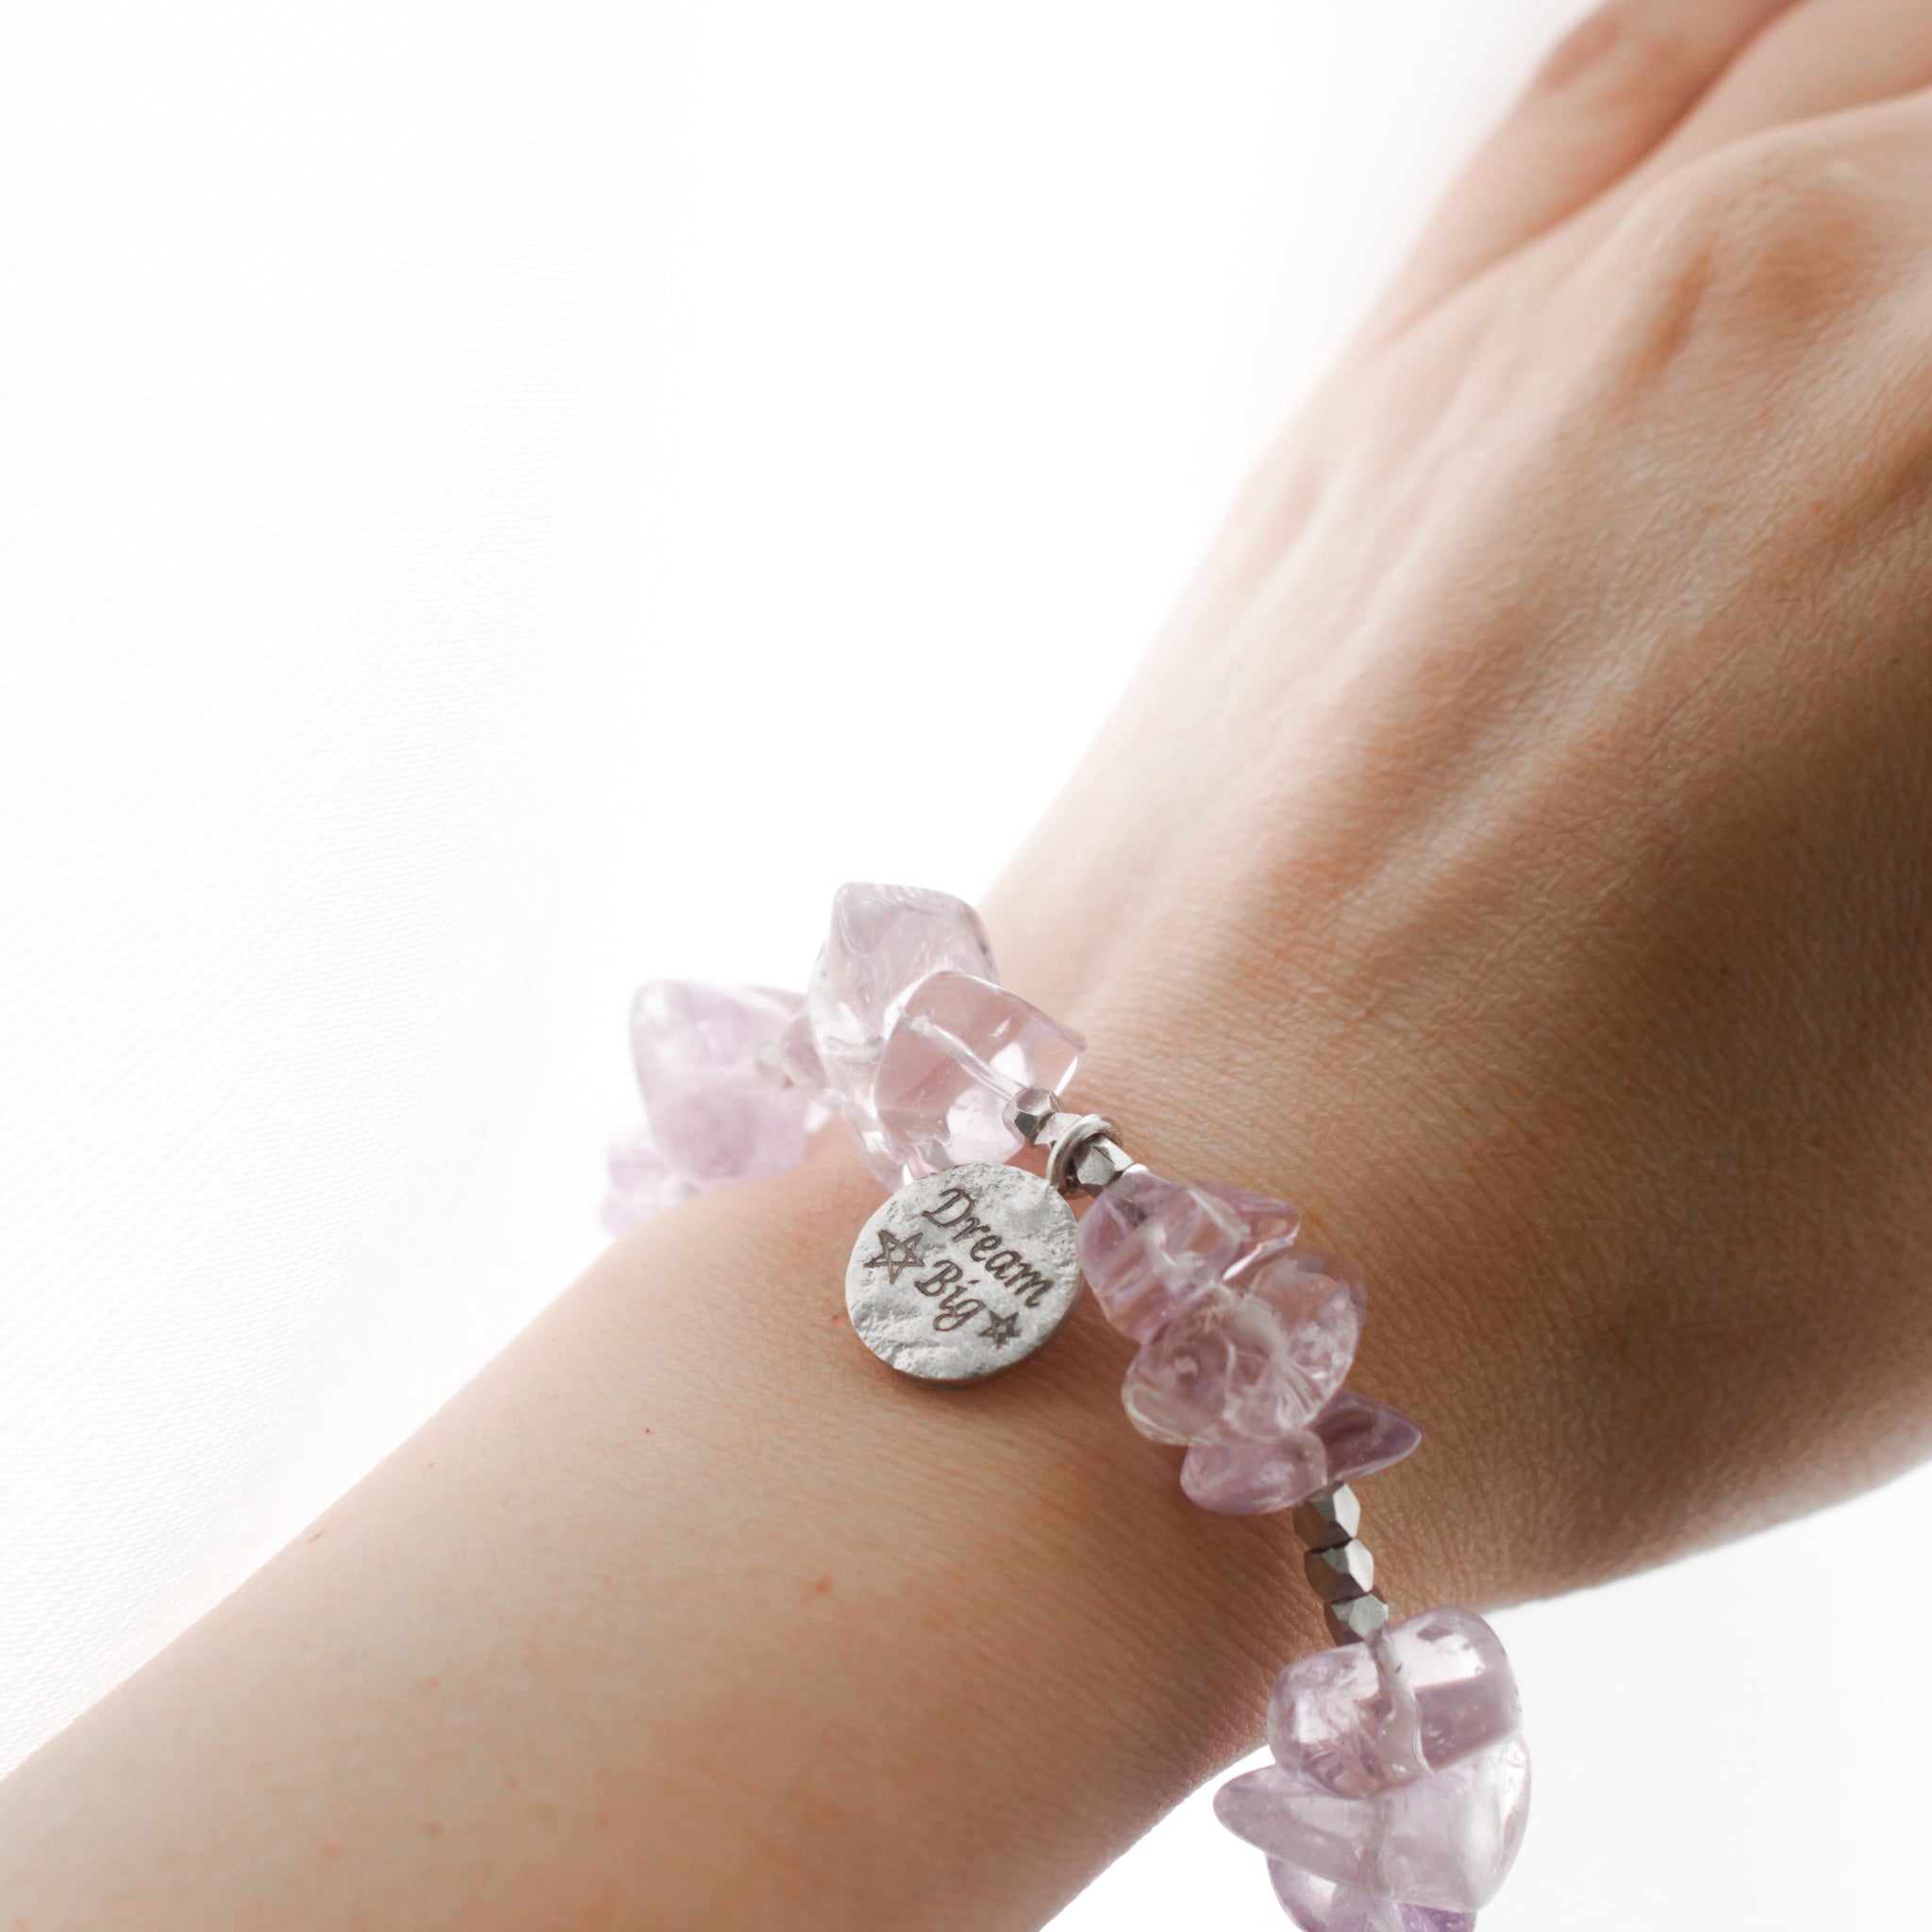 Make A Wish Bracelet - Amethyst with Engraved Silver Charm Elastic Bracelet